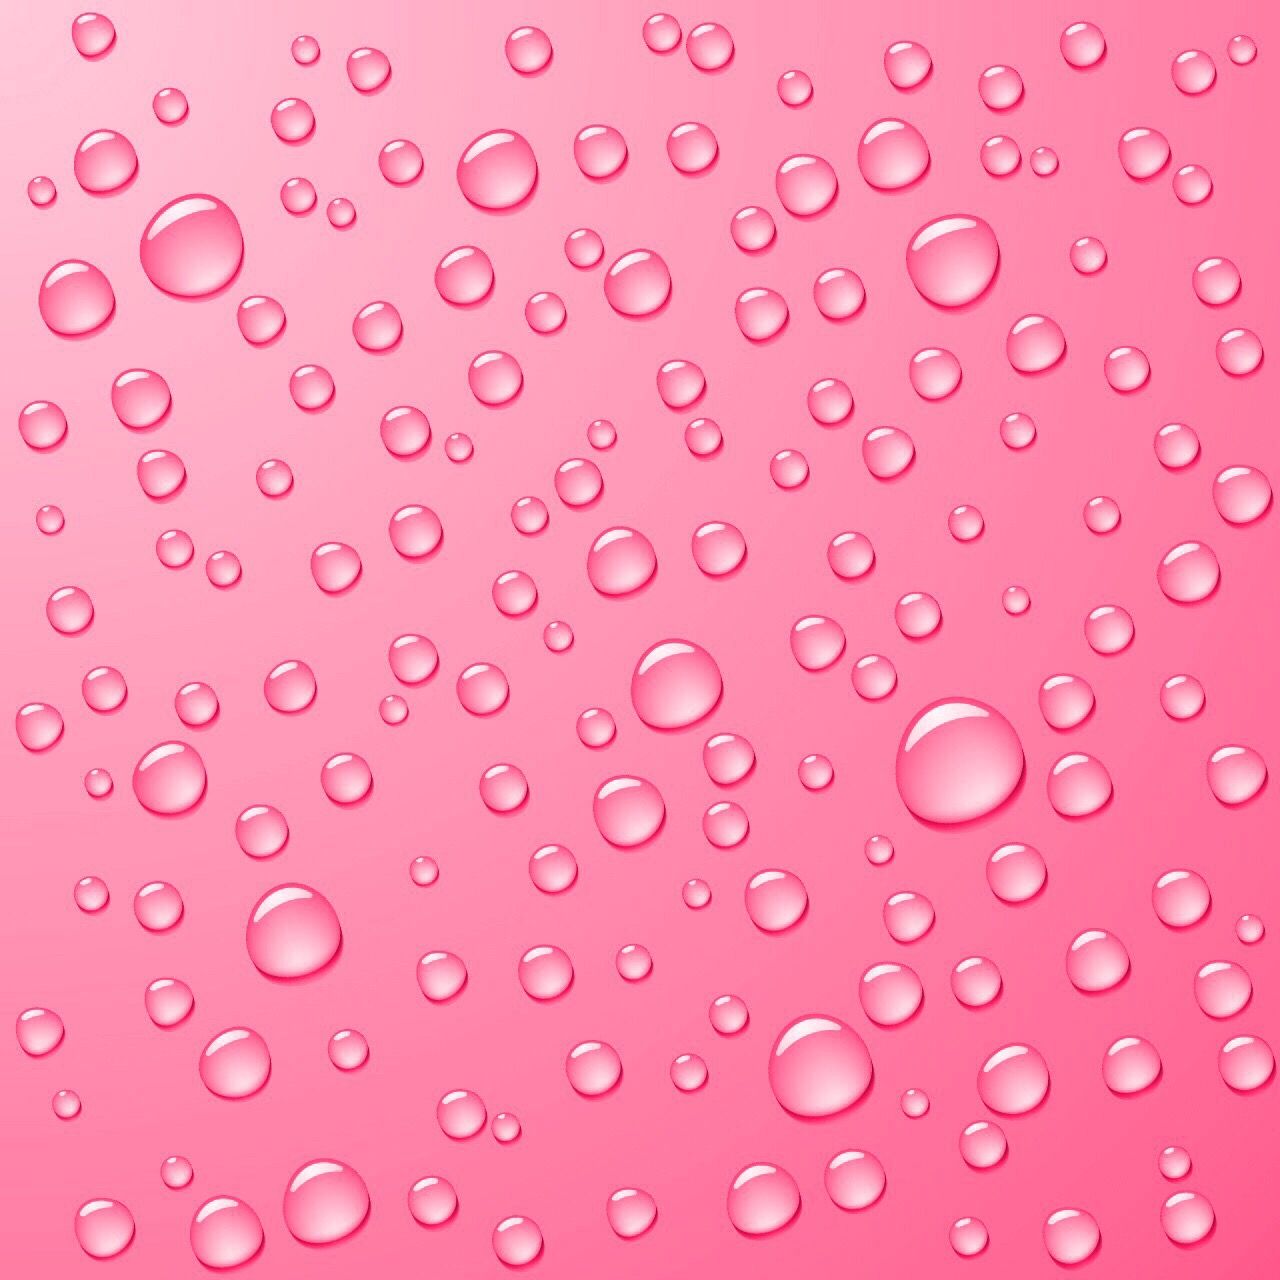 Nine Shades of Pink Recolored Raindrops .com